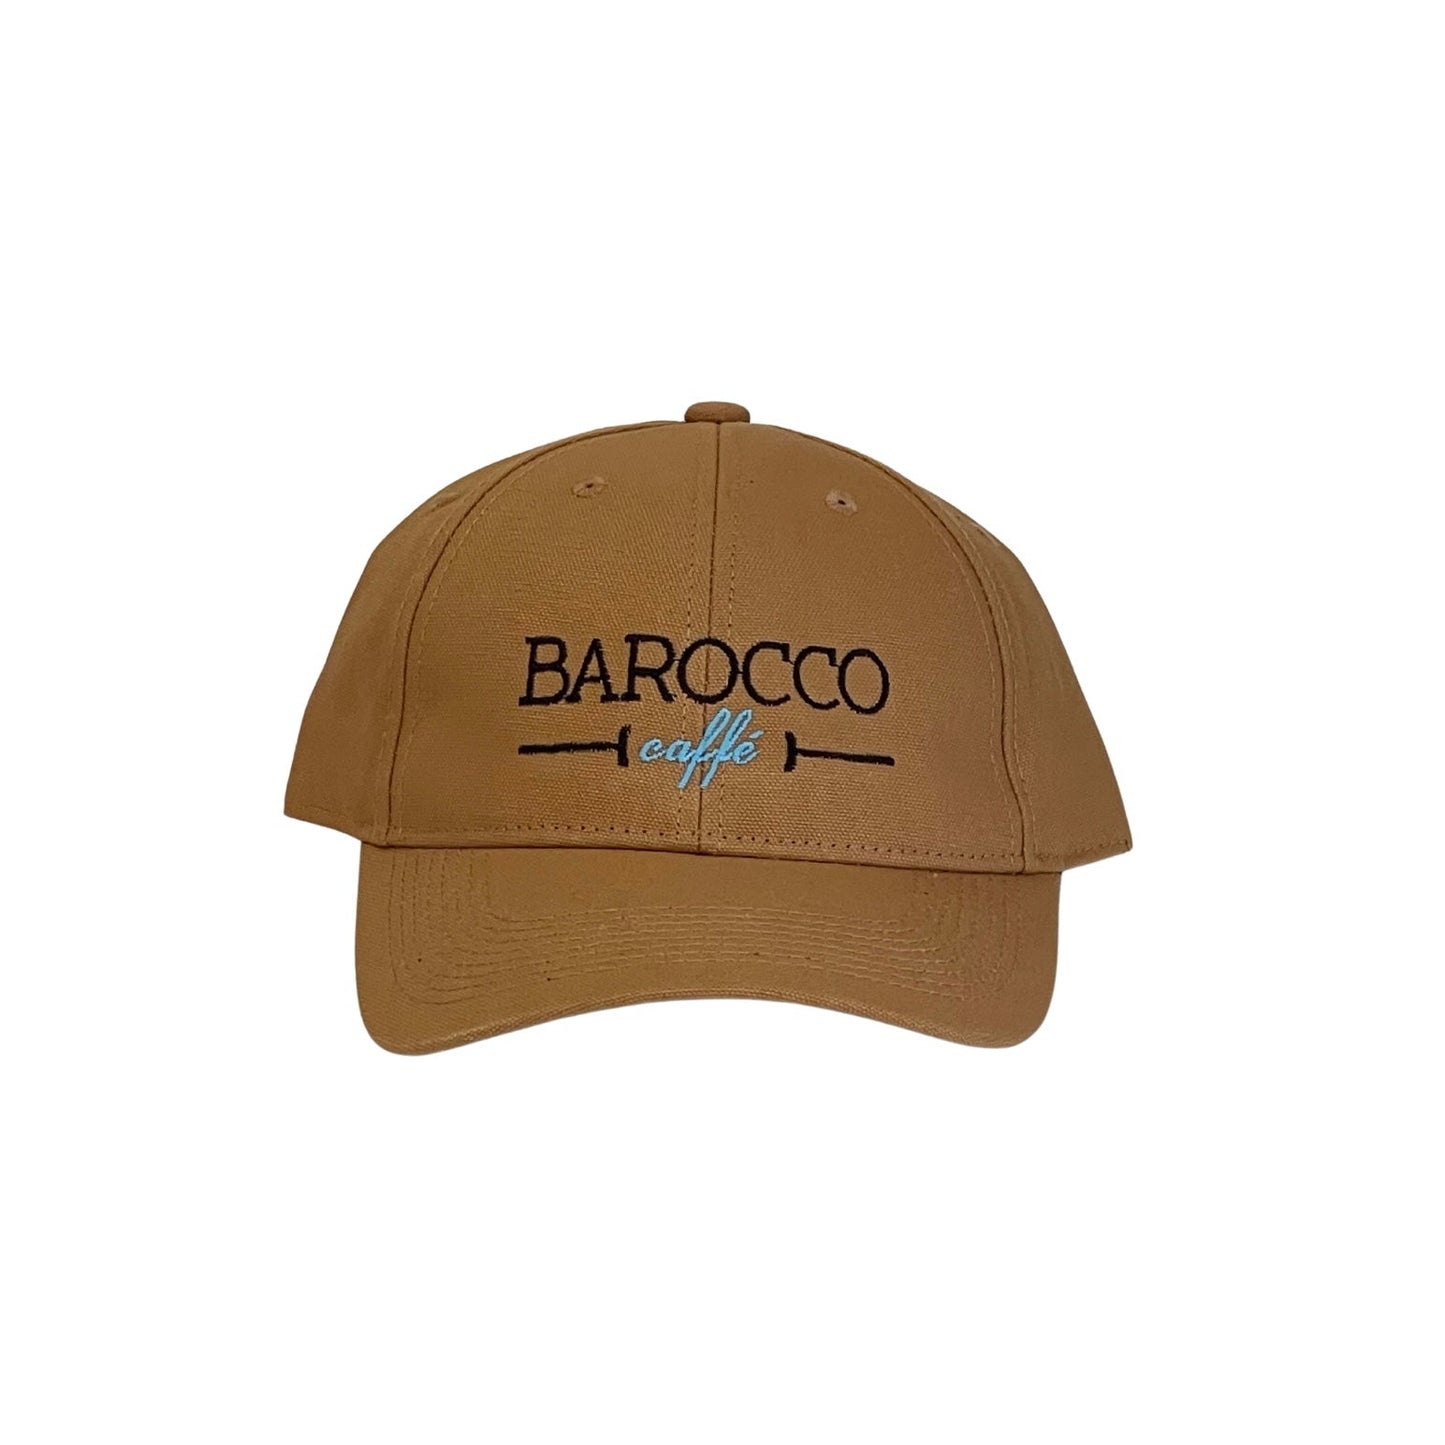 Barocco - Raw Canvas Cap - 1pc